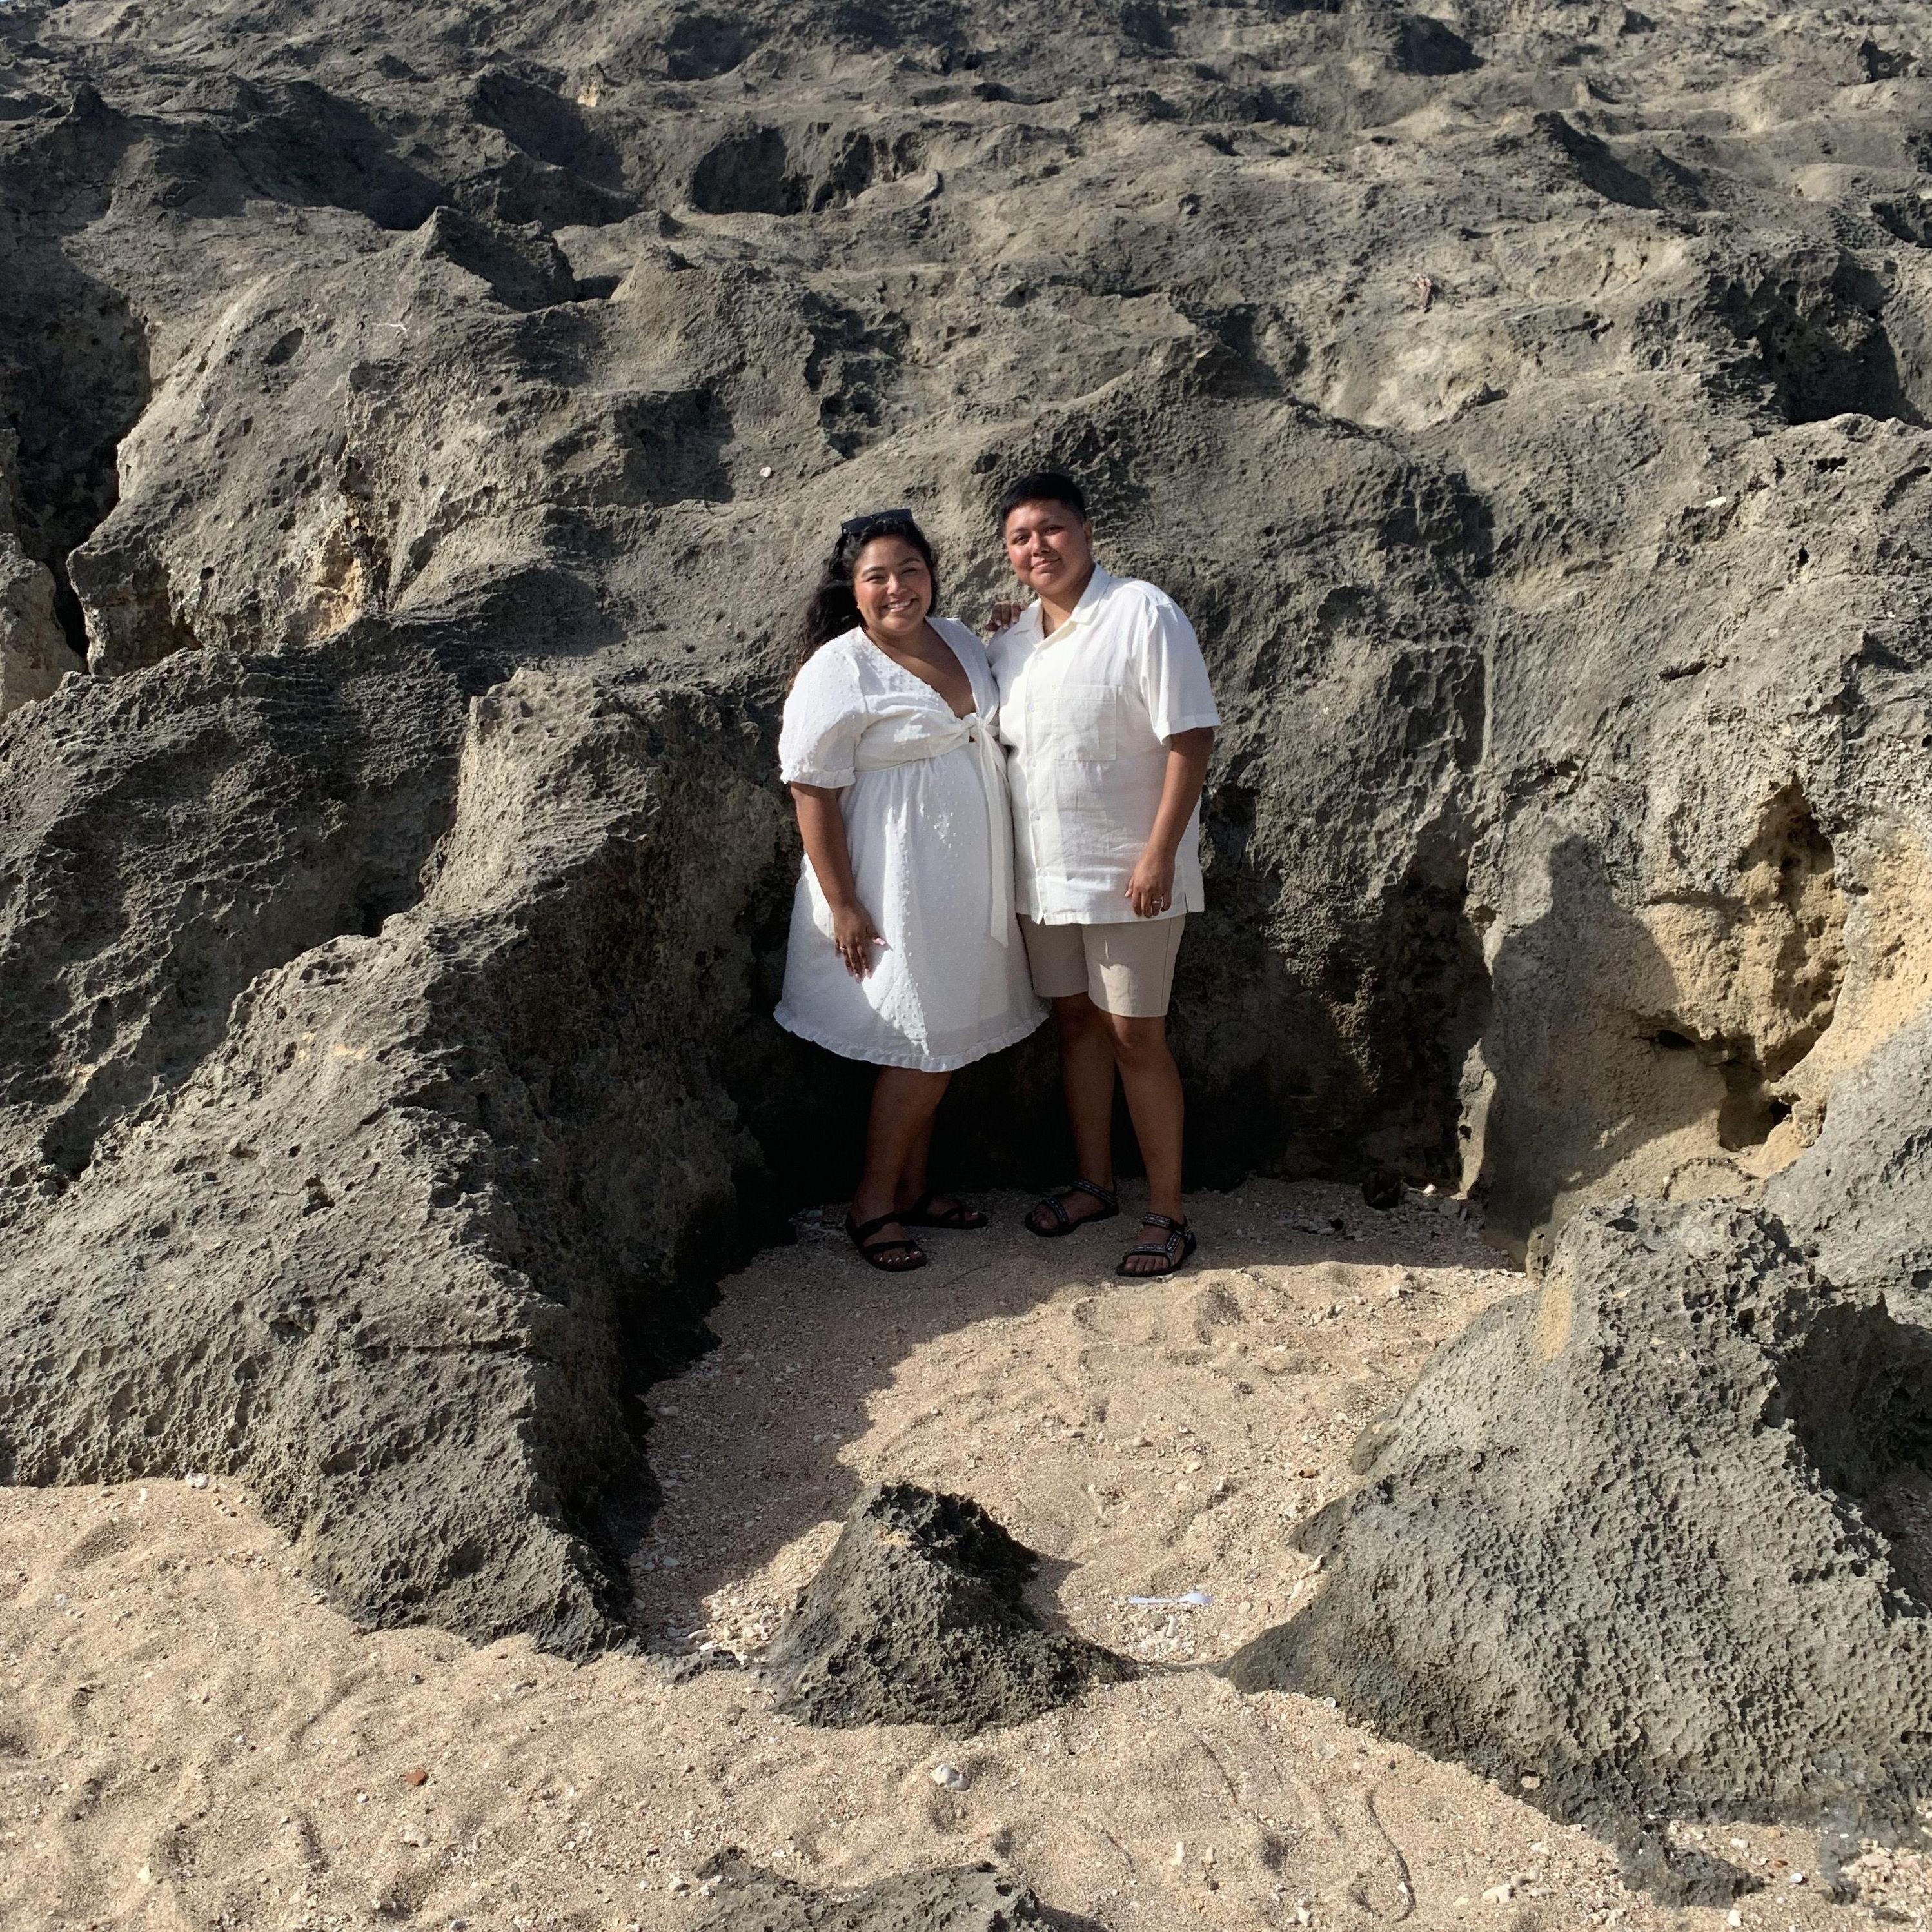 Anniversary trip to Puerto Rico - Juanita proposed on the beach!